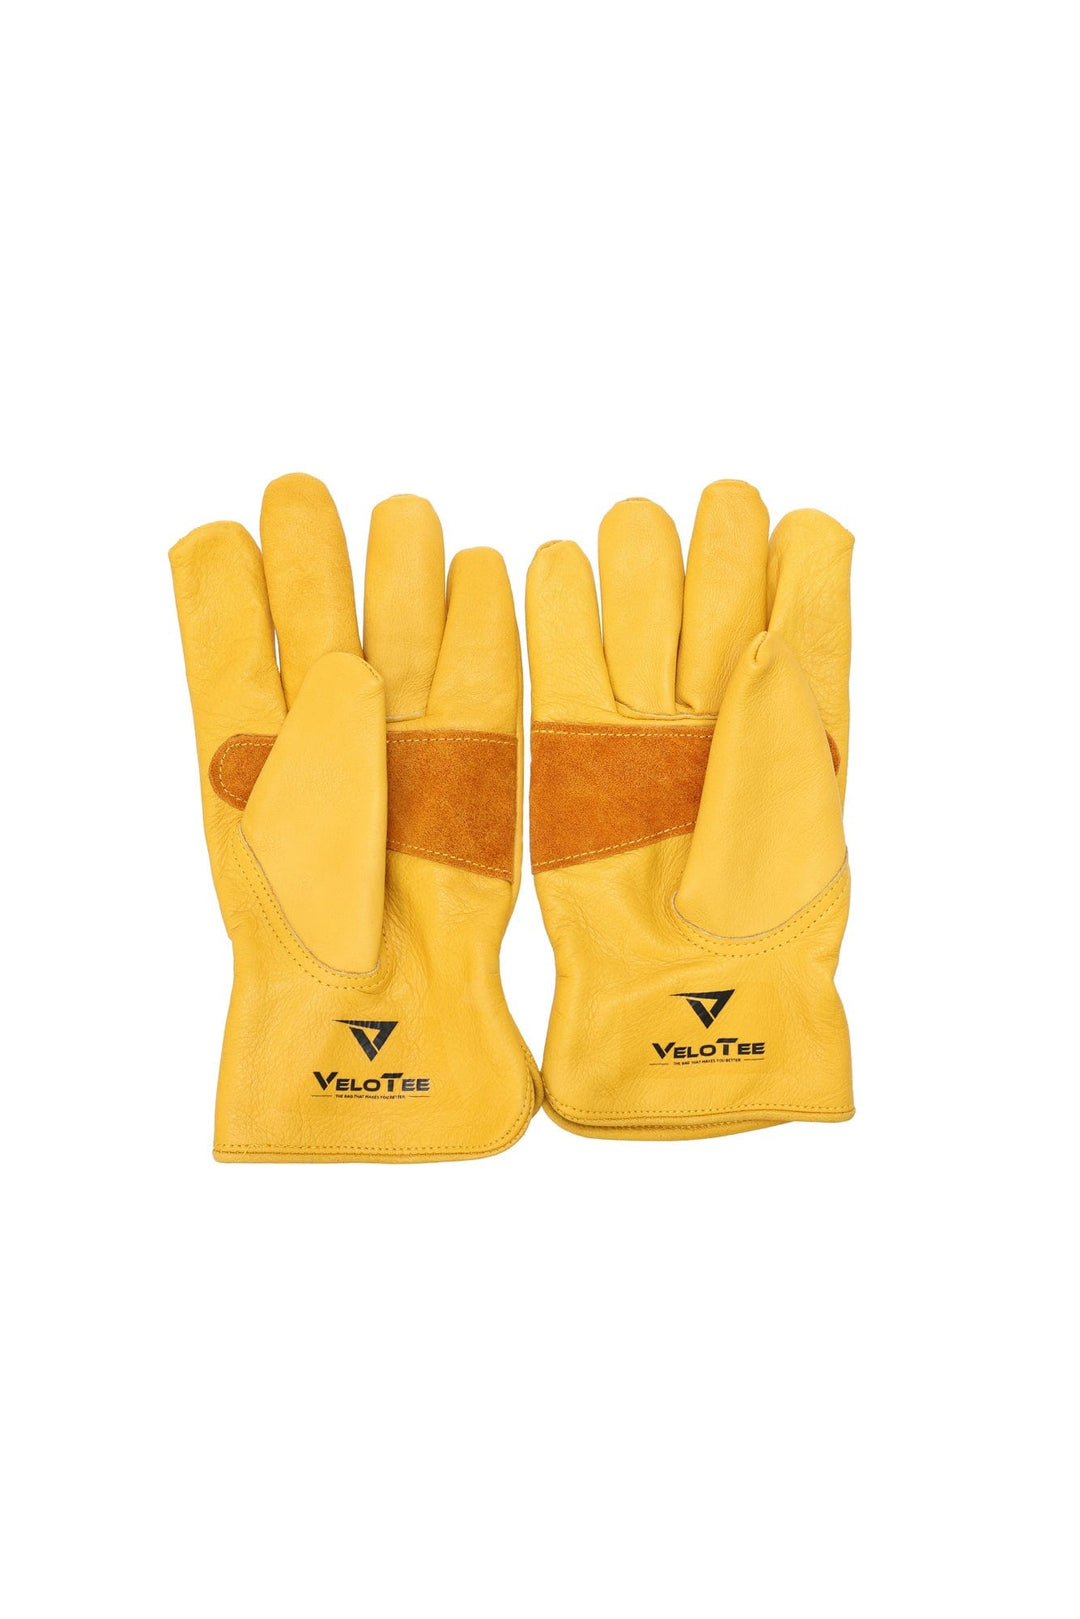 VeloTee Batting Gloves VeloTee "Yard Work" Baseball & Softball Batting Gloves